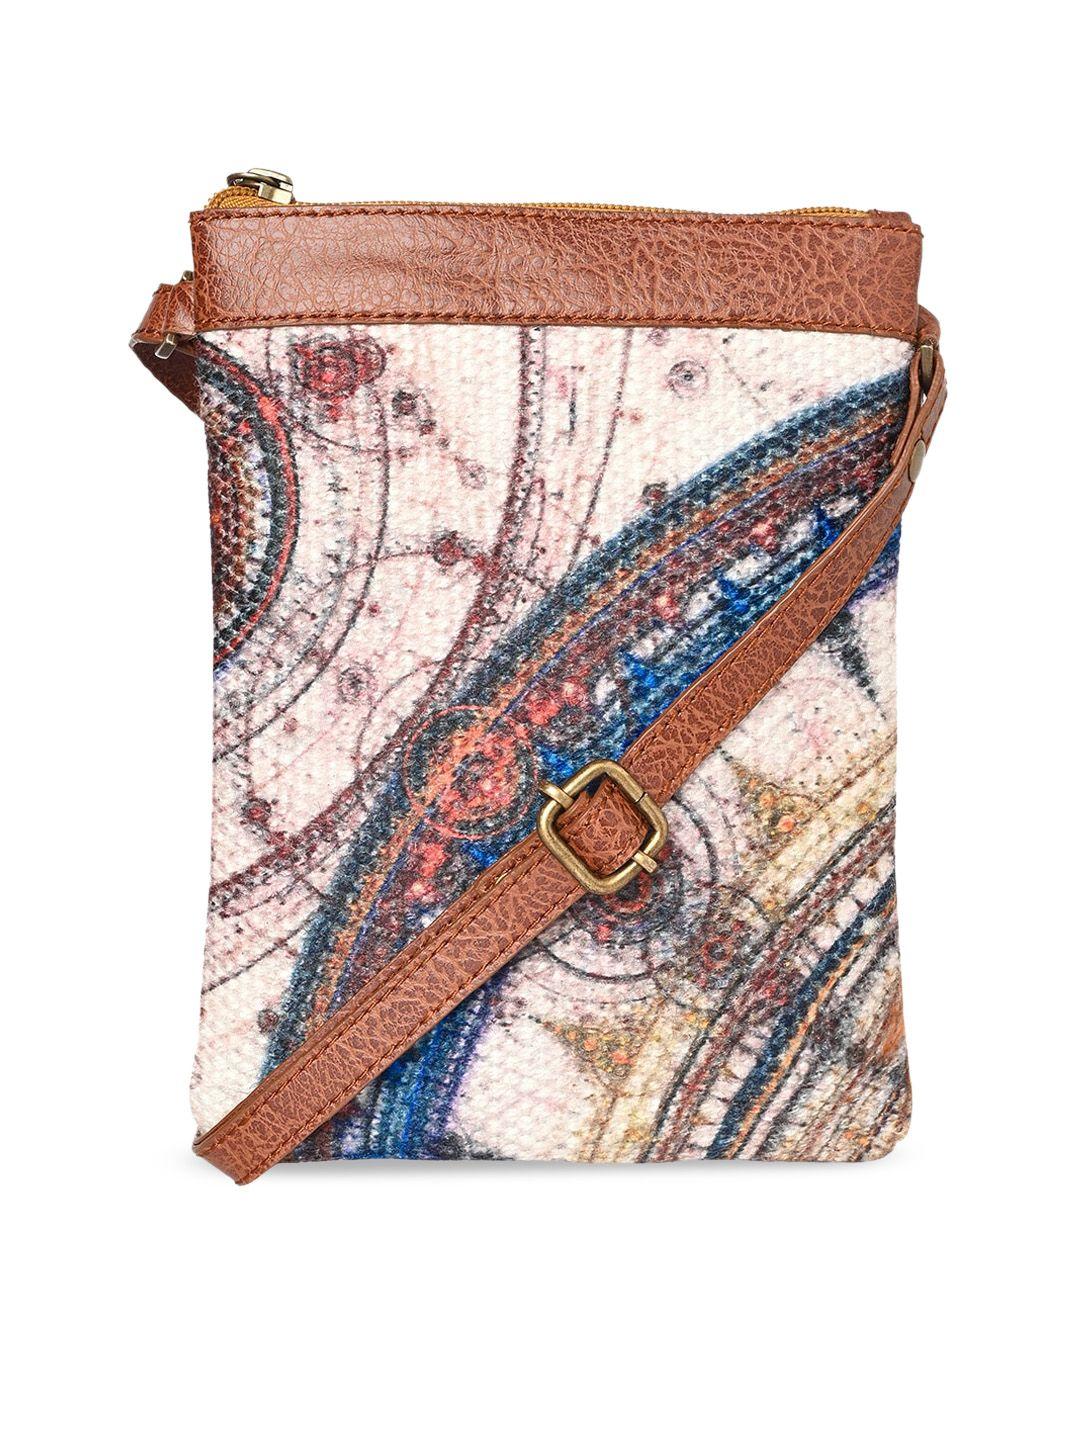 mona b embellished swagger sling bag